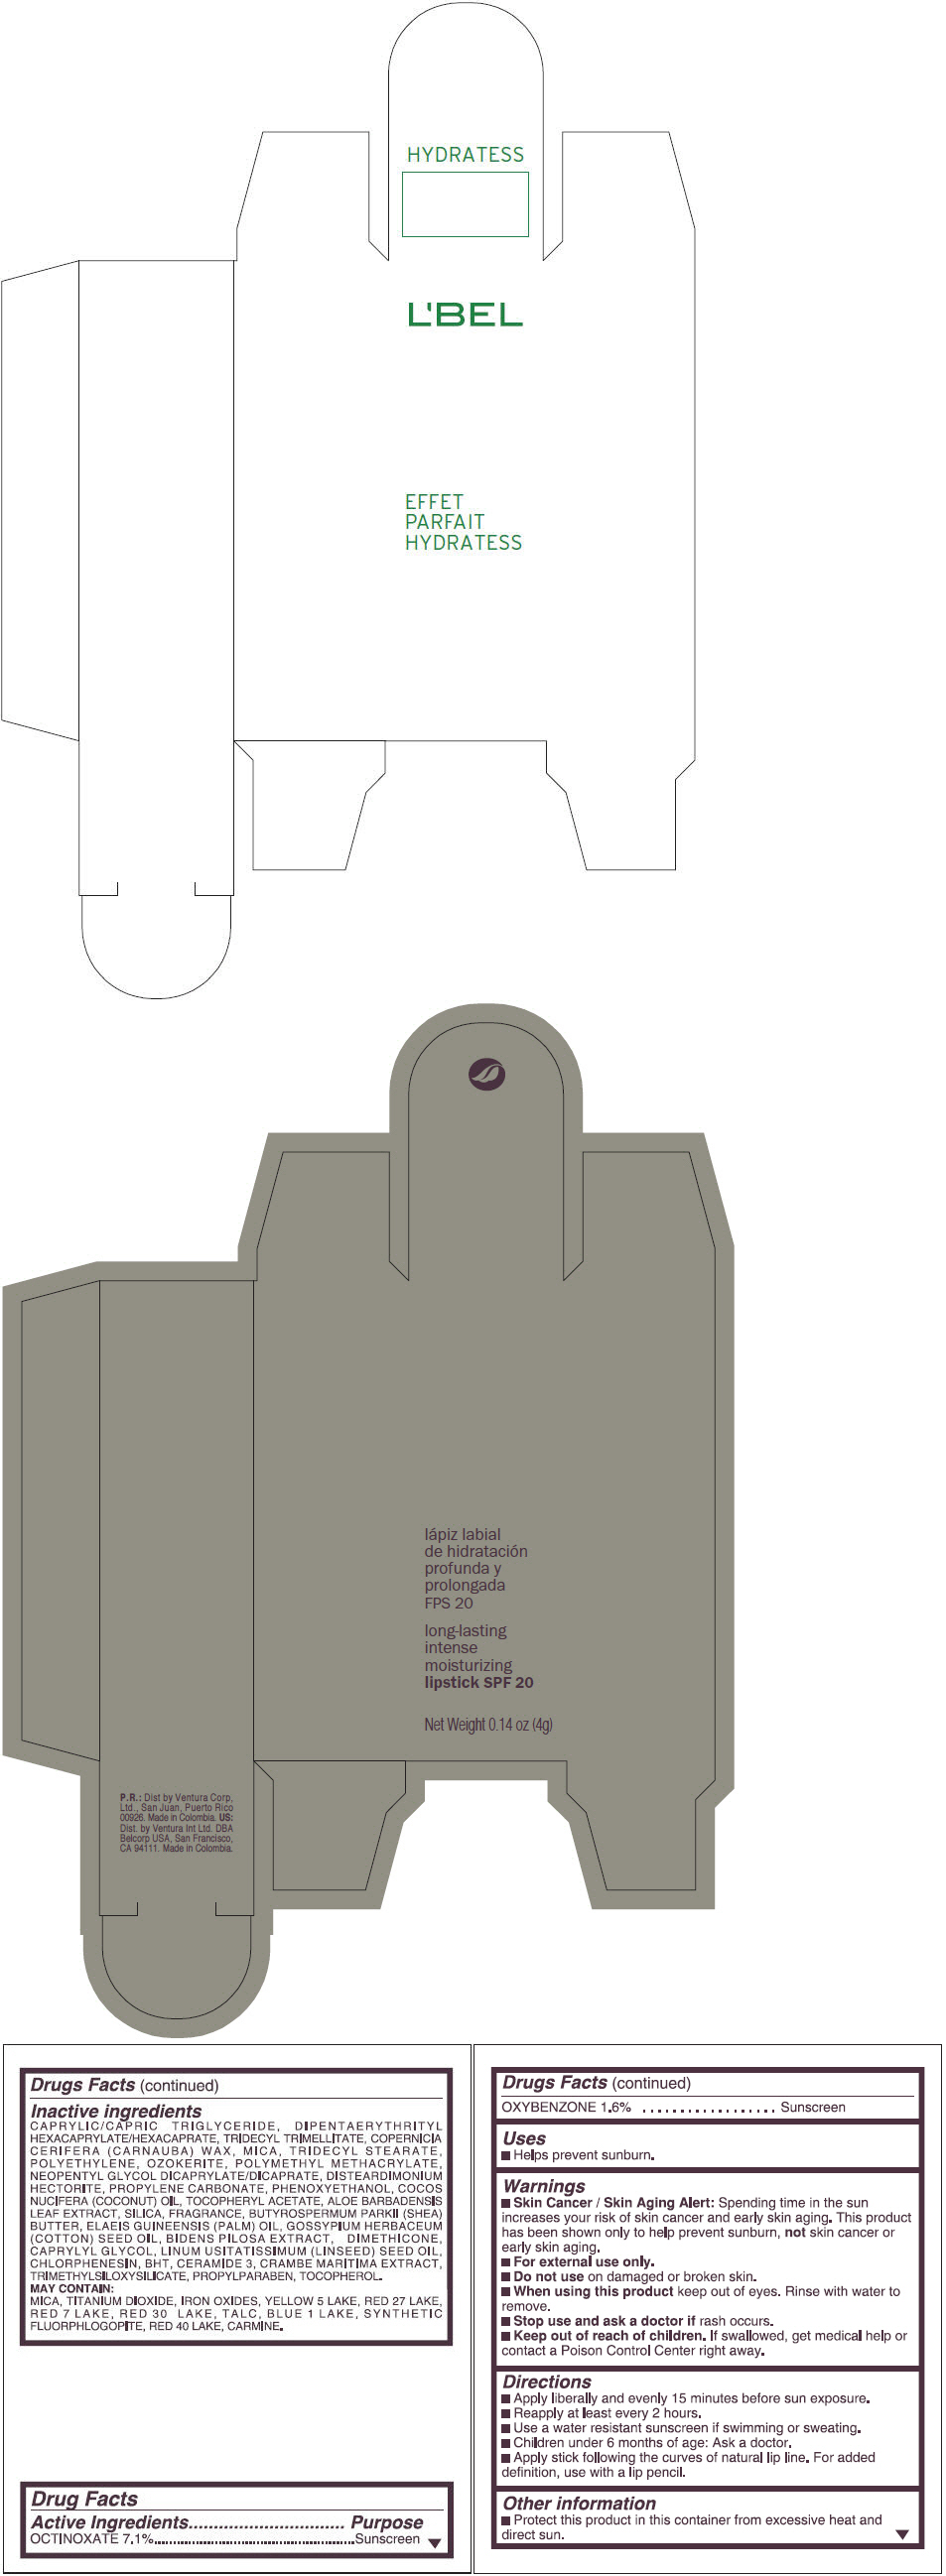 PRINCIPAL DISPLAY PANEL - 4 g Tube Box - (CHOCOLAT) - BROWN